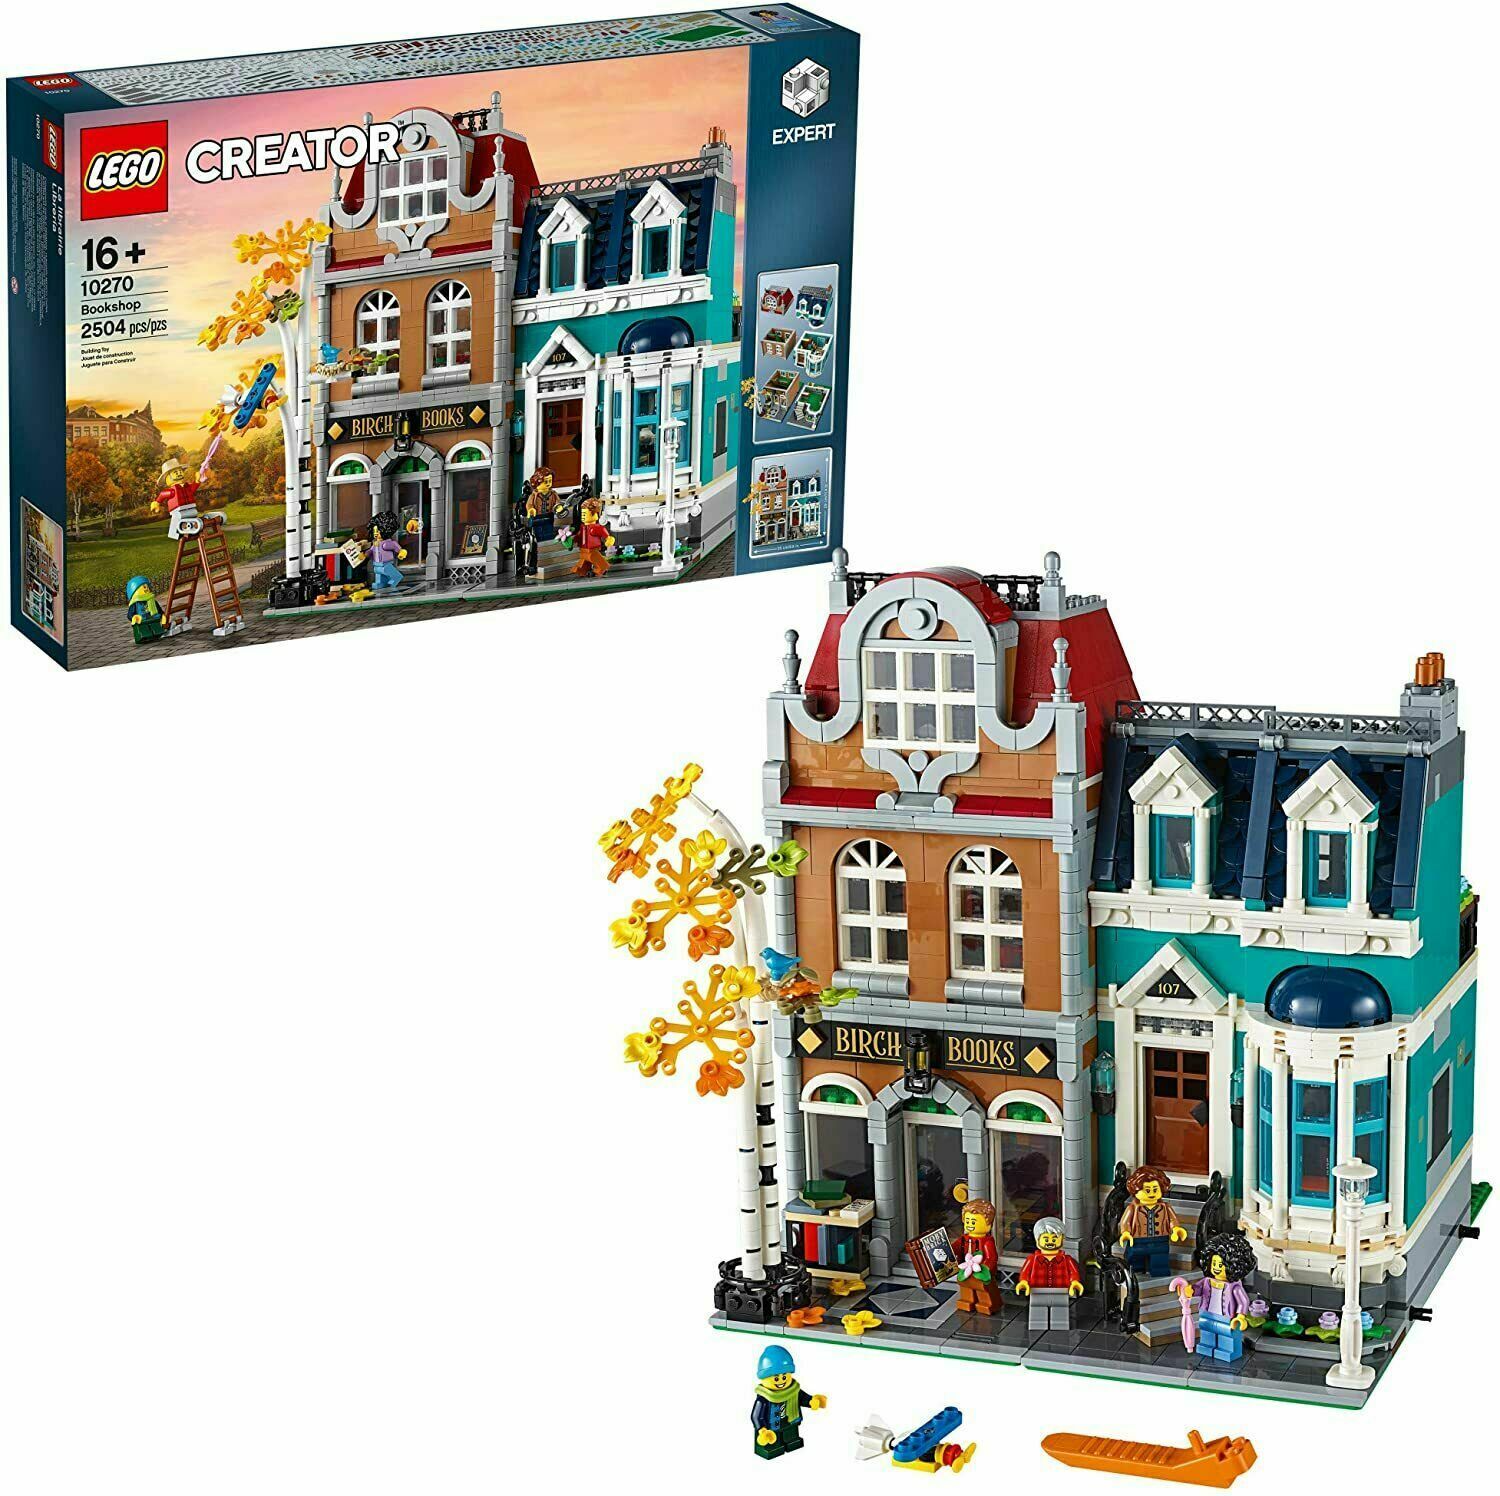 *Brand New Sealed* LEGO CREATOR Expert Bookshop 10270 | AUS Stock - Hard to Find